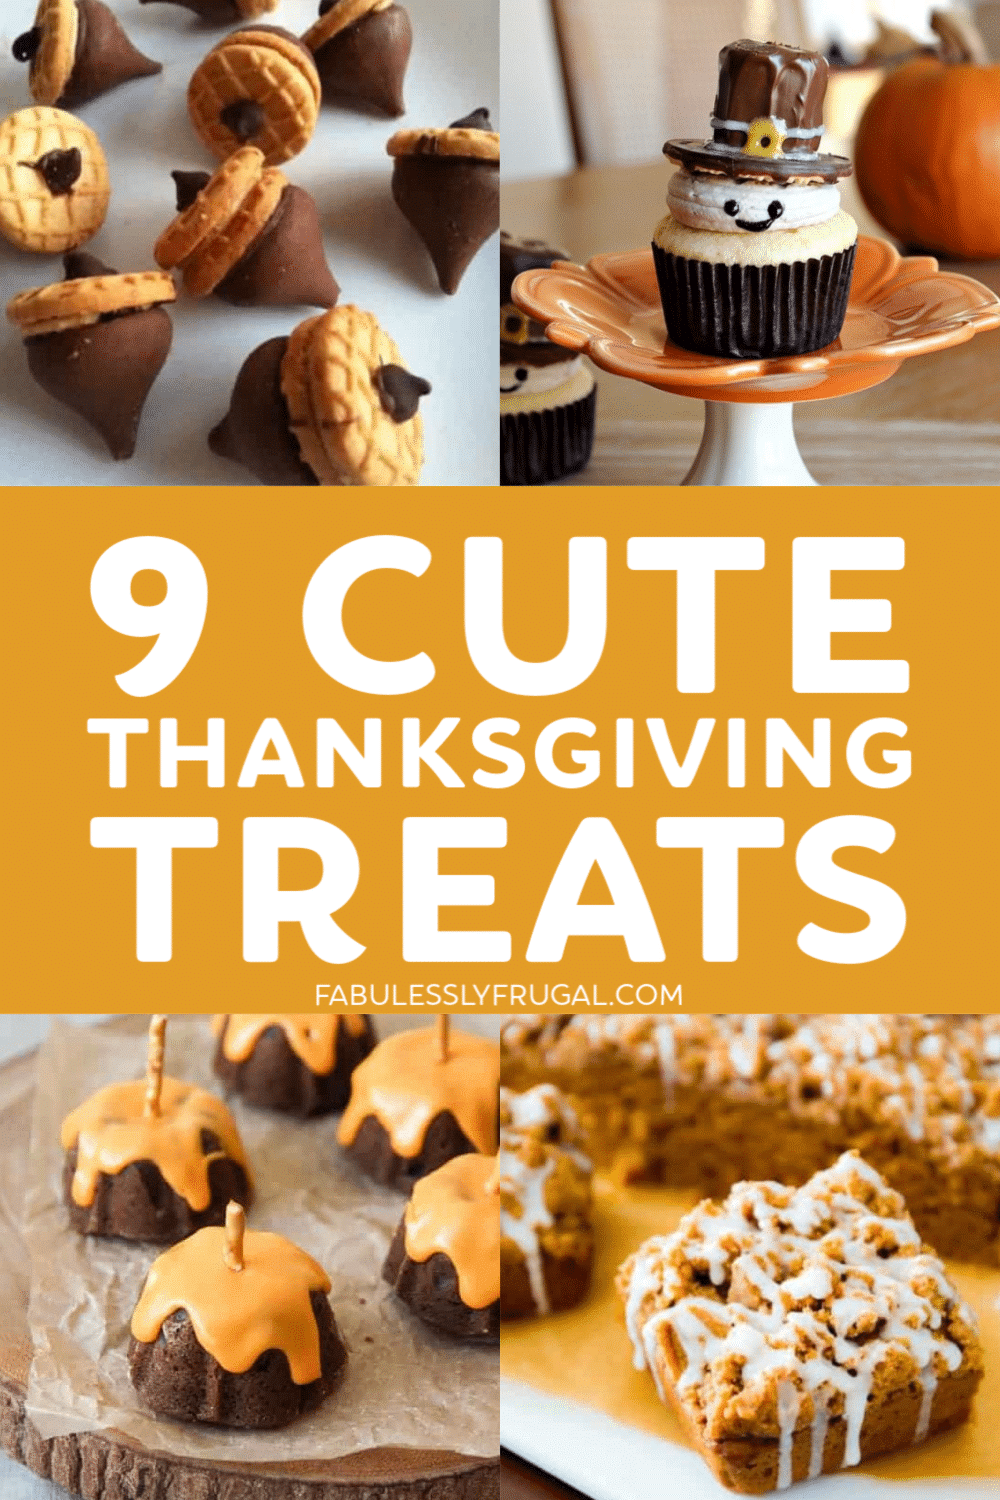 Cute thanksgiving treats